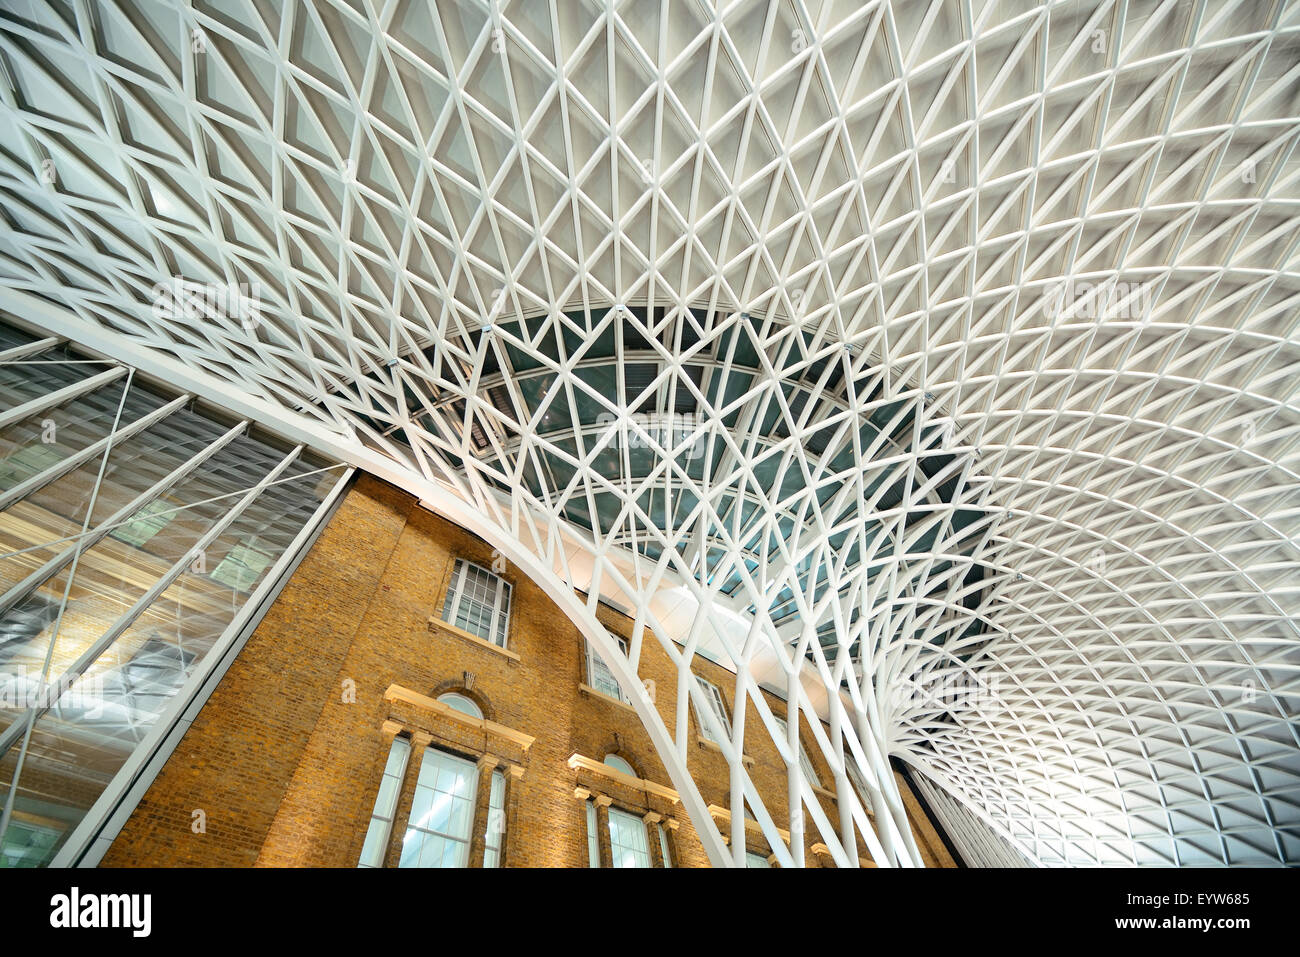 Kings Cross Railway Station Interieur in London, UK. Stockfoto